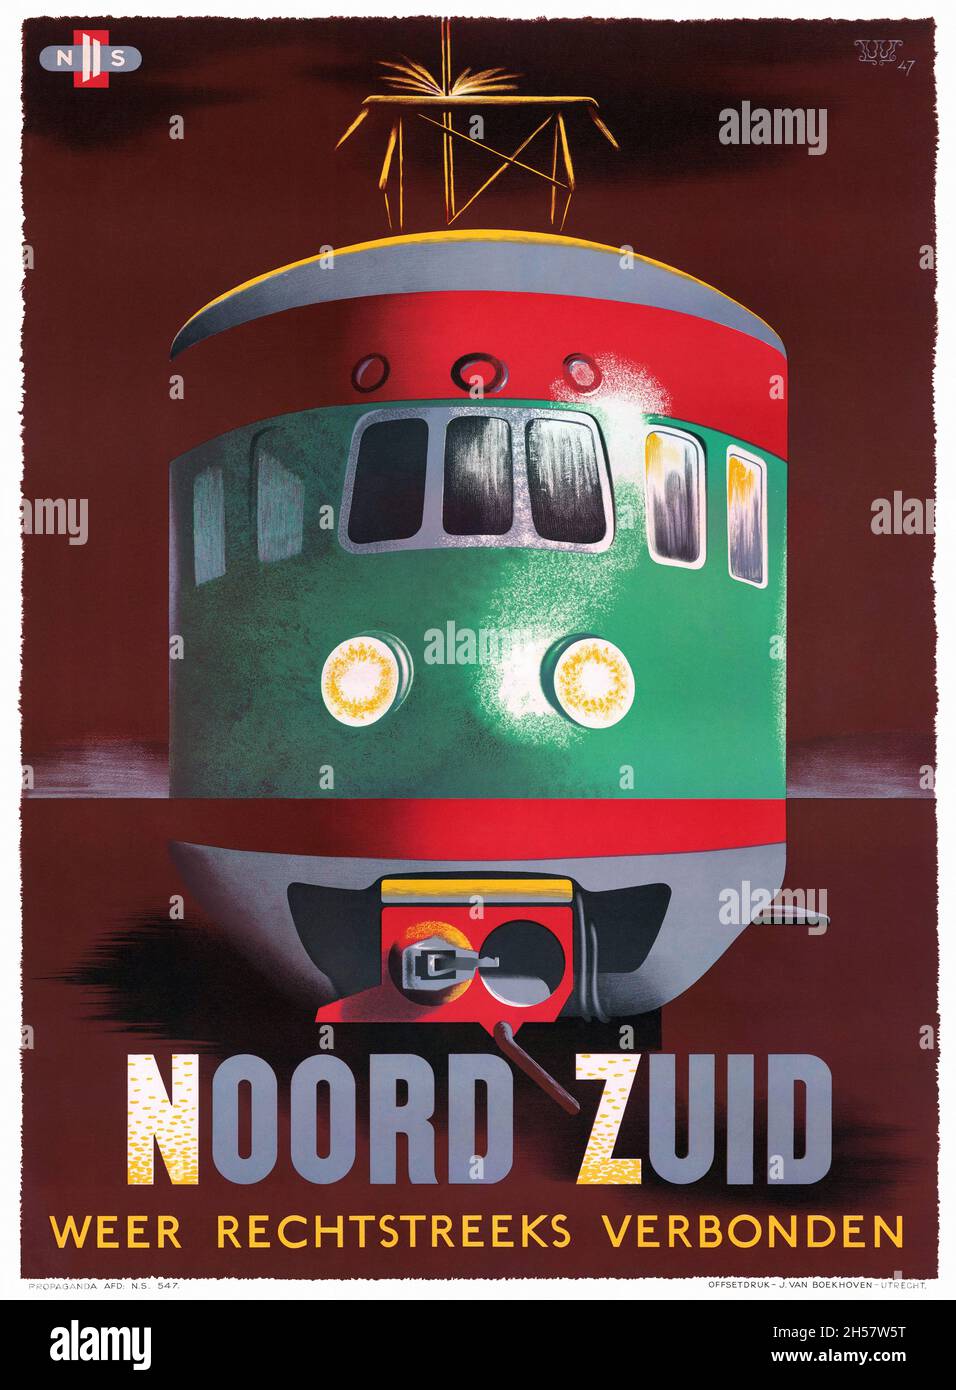 Noord Zuid weer rechtstreeks verbonden by Fedde Weidema (1915-2000). Restored vintage poster published in 1947 in the Netherlands. Stock Photo